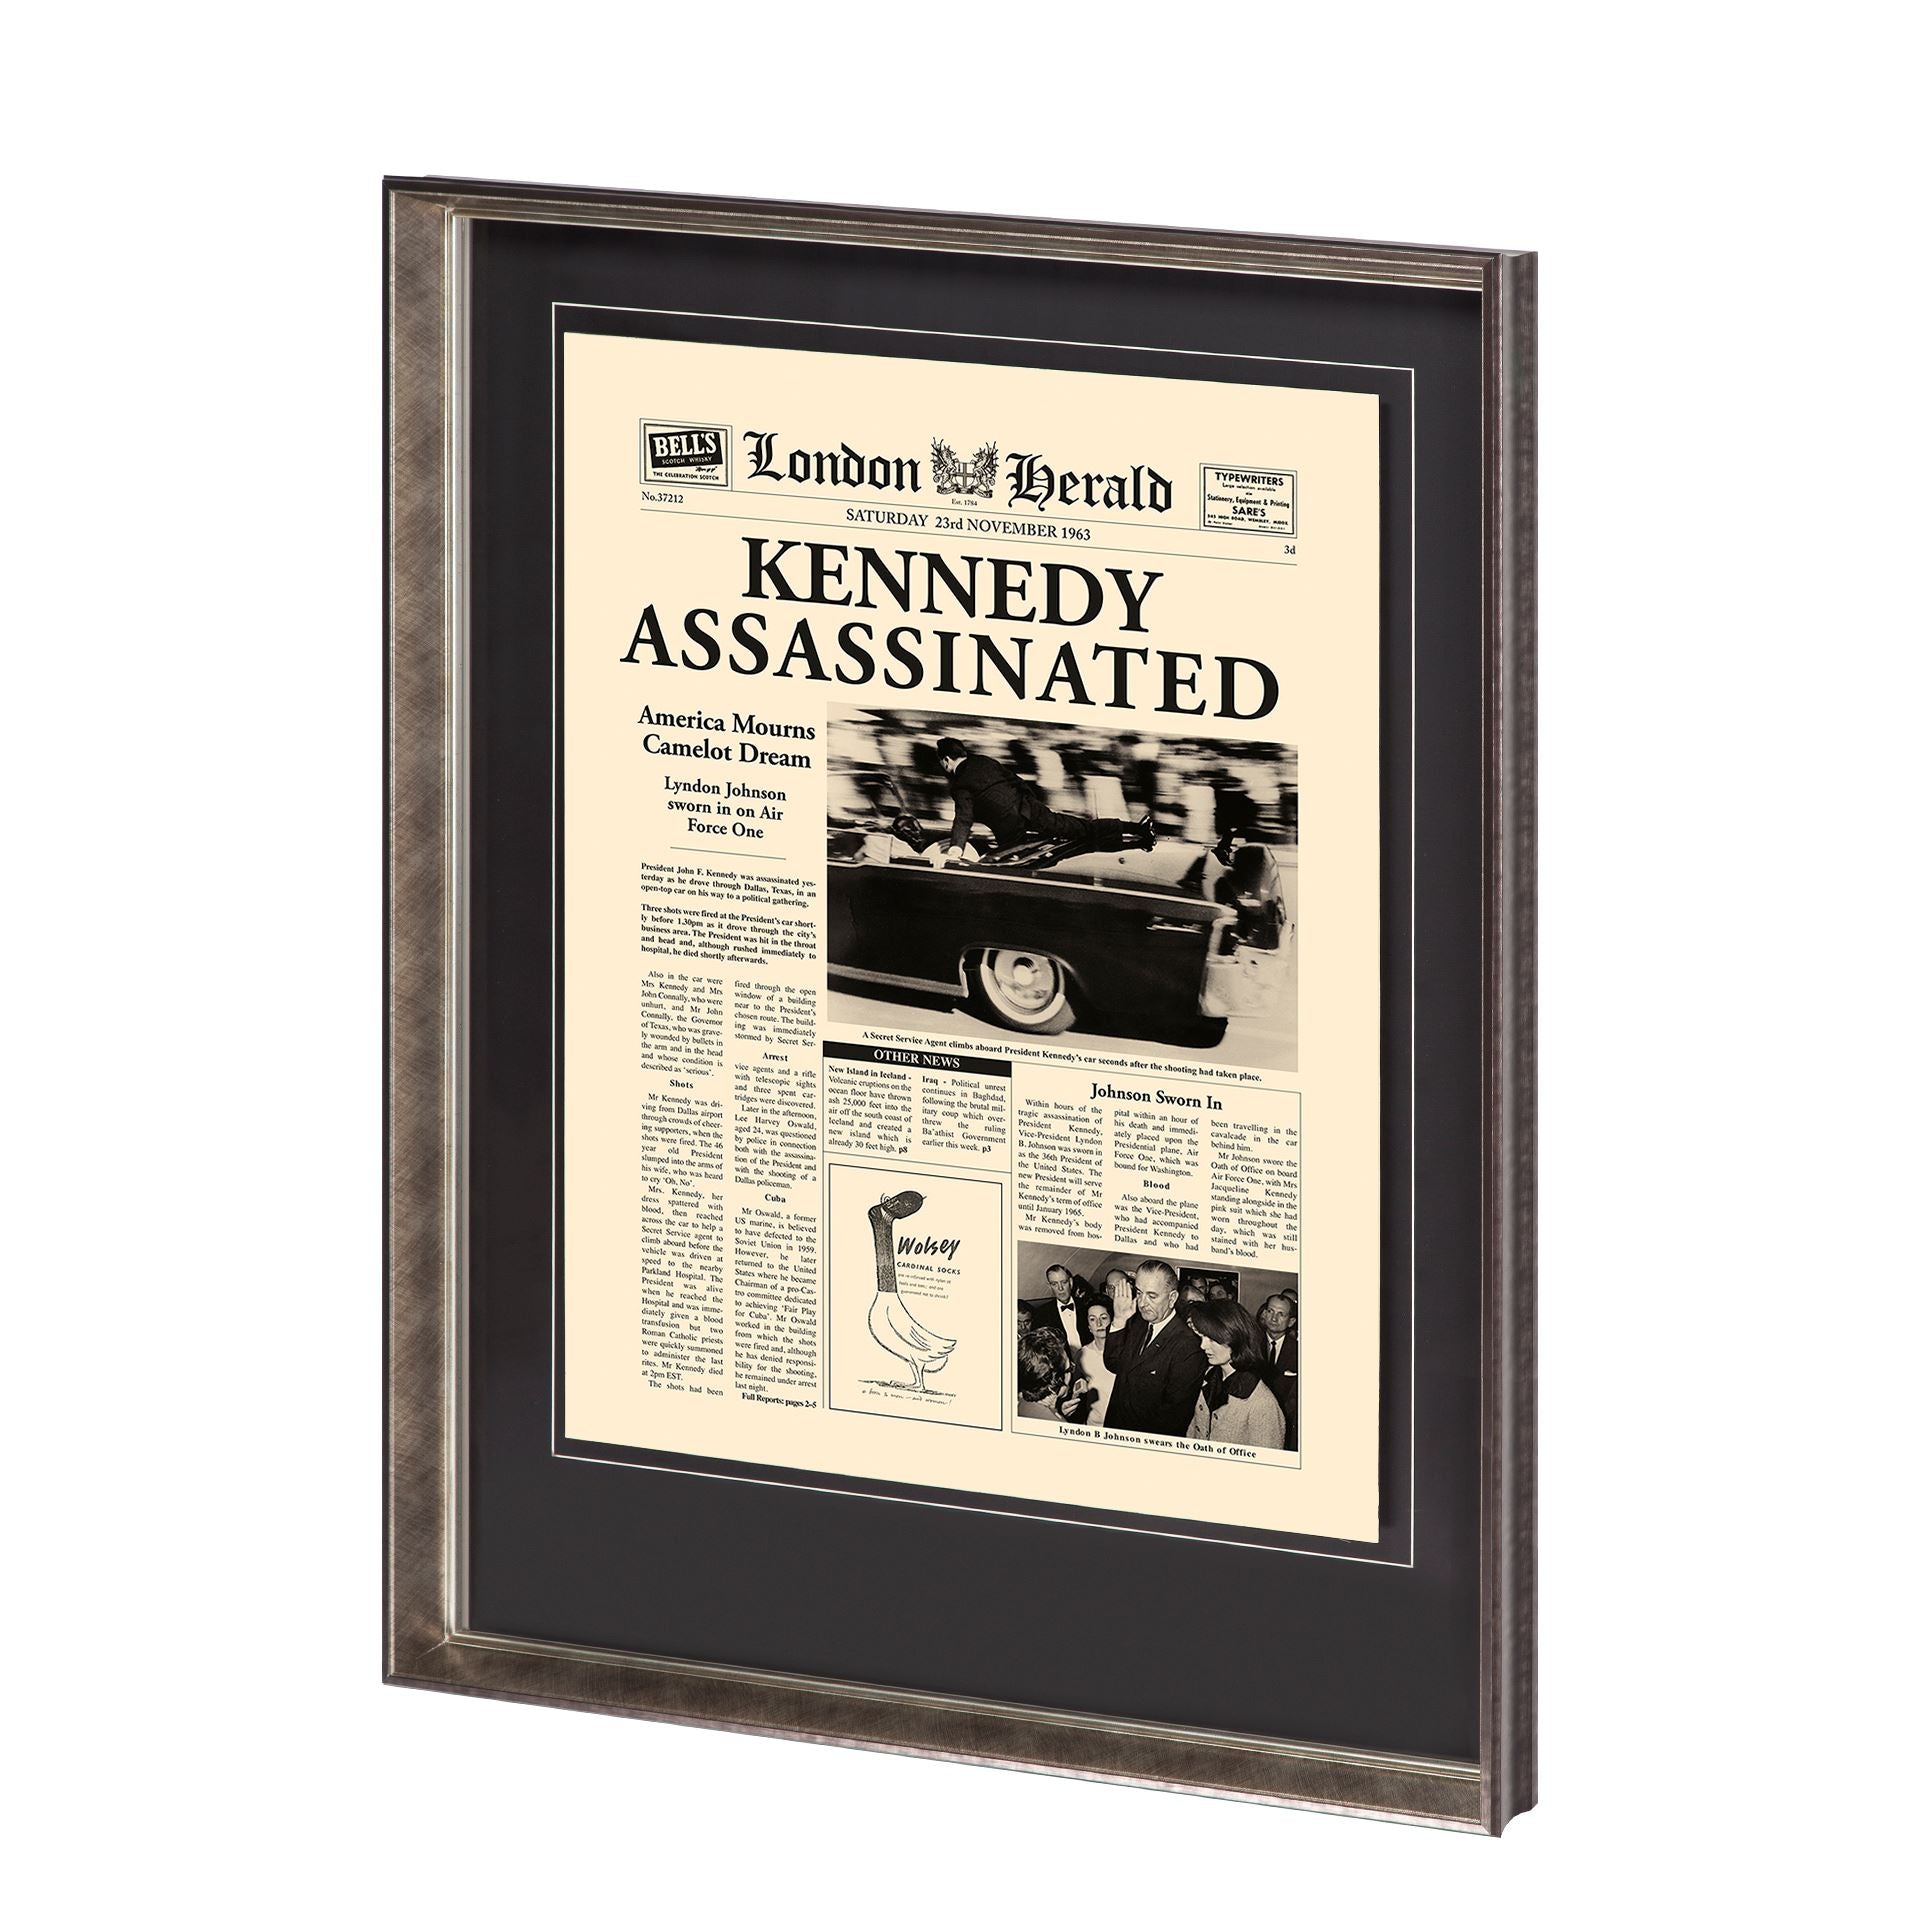 Kennedy Assassinated News Headliner Art